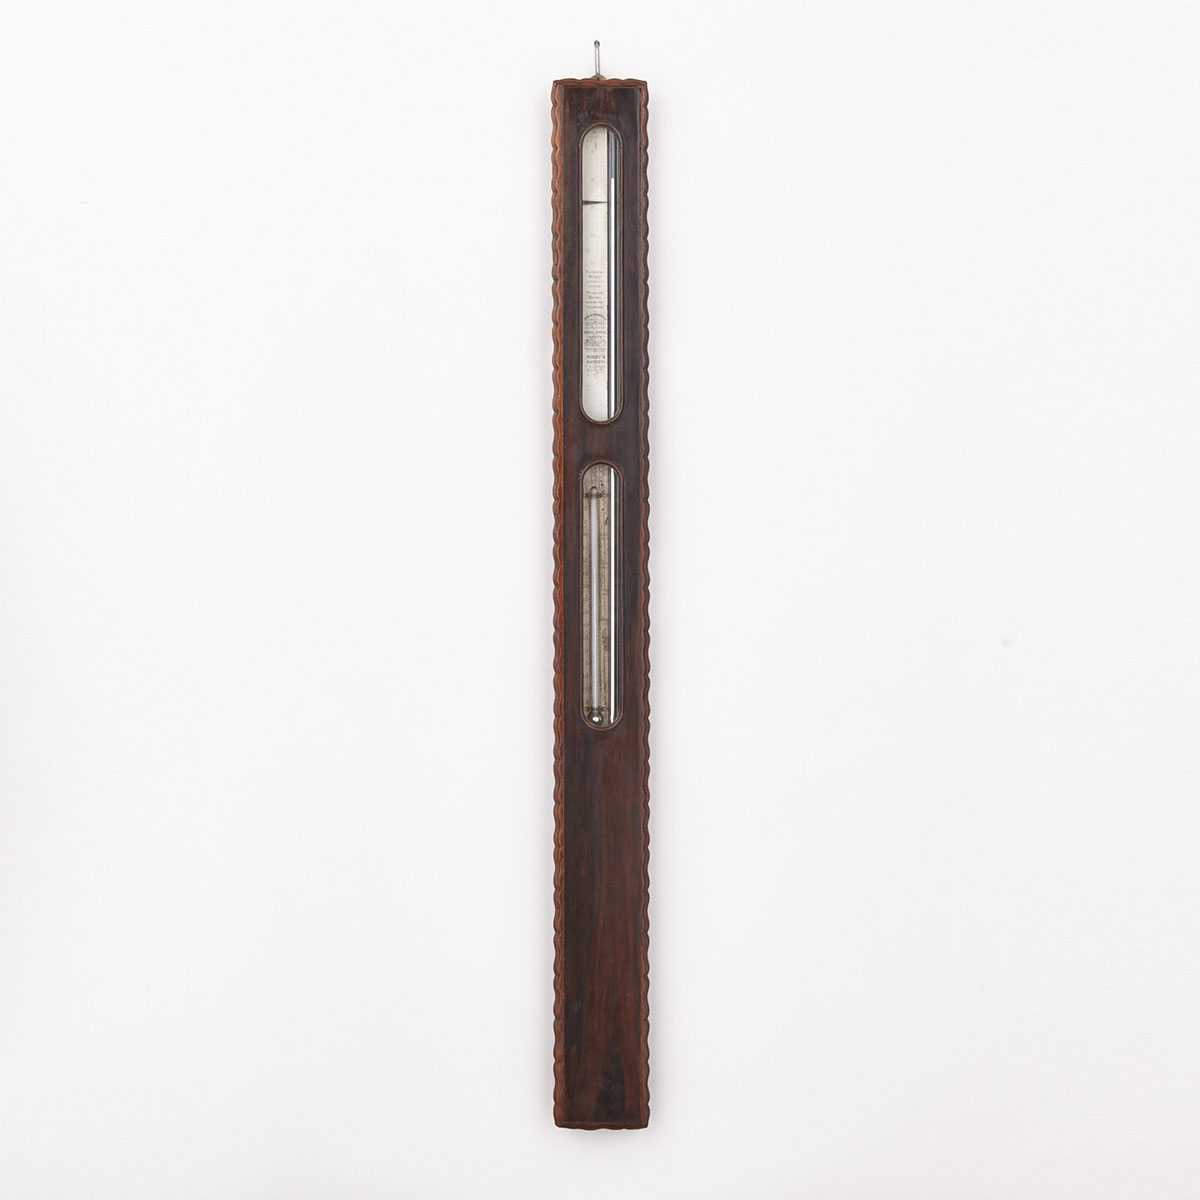 American Rosewood ‘Timby’s Patent’ Stick Barometer, John M. Merrick and Company, Worcester, Massachusetts, c.1870